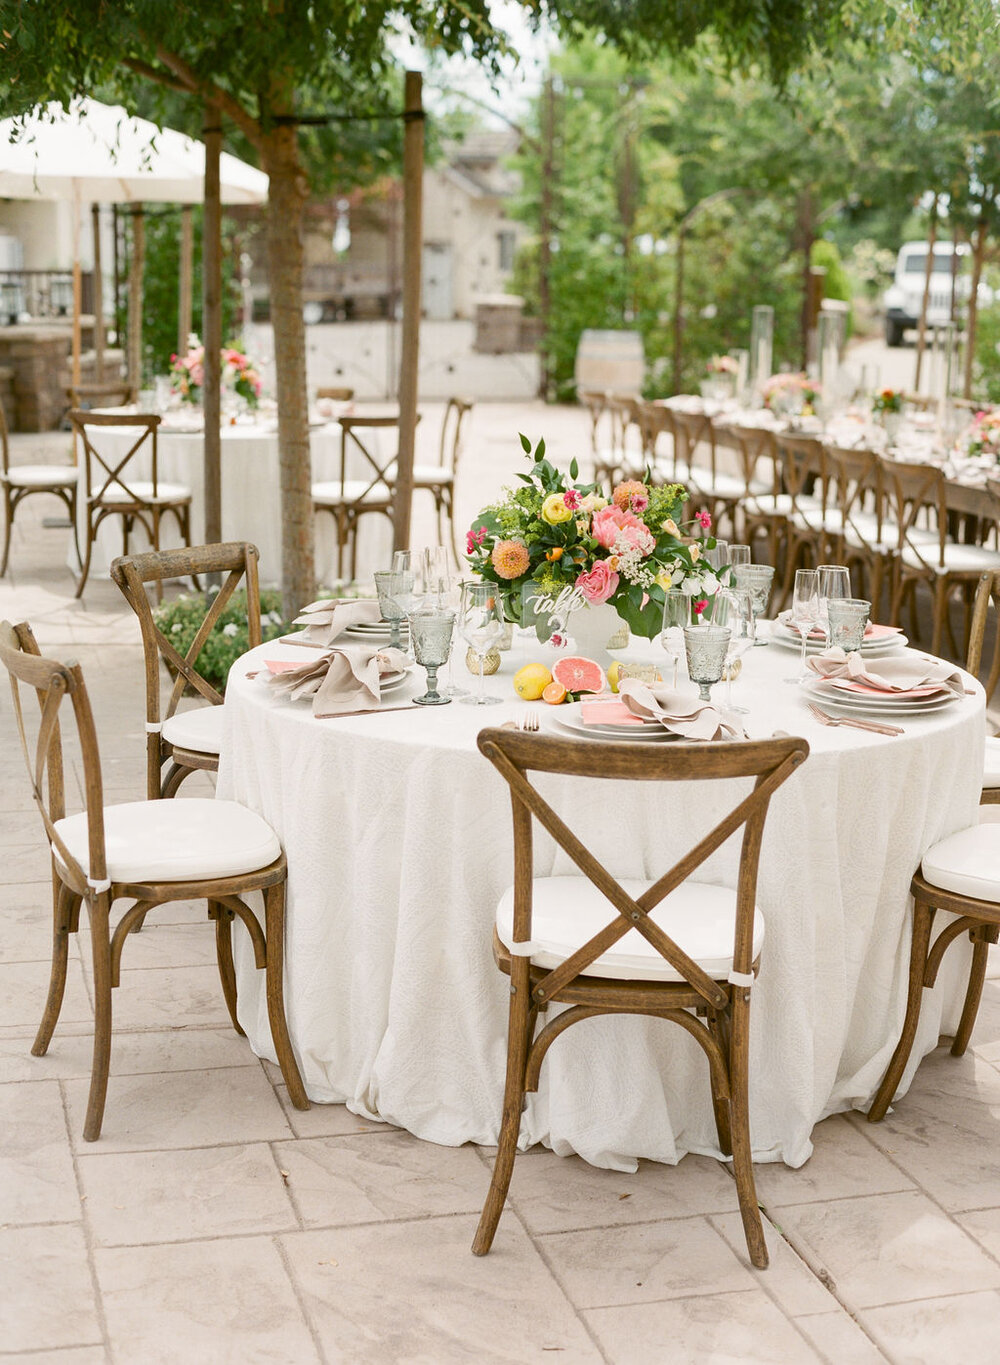 VioletteFleurs-crossback-chairs-Married-AshleyBaumgartner-WeddingDetails-centerpieces-latavola-celebrationsrentals.jpg